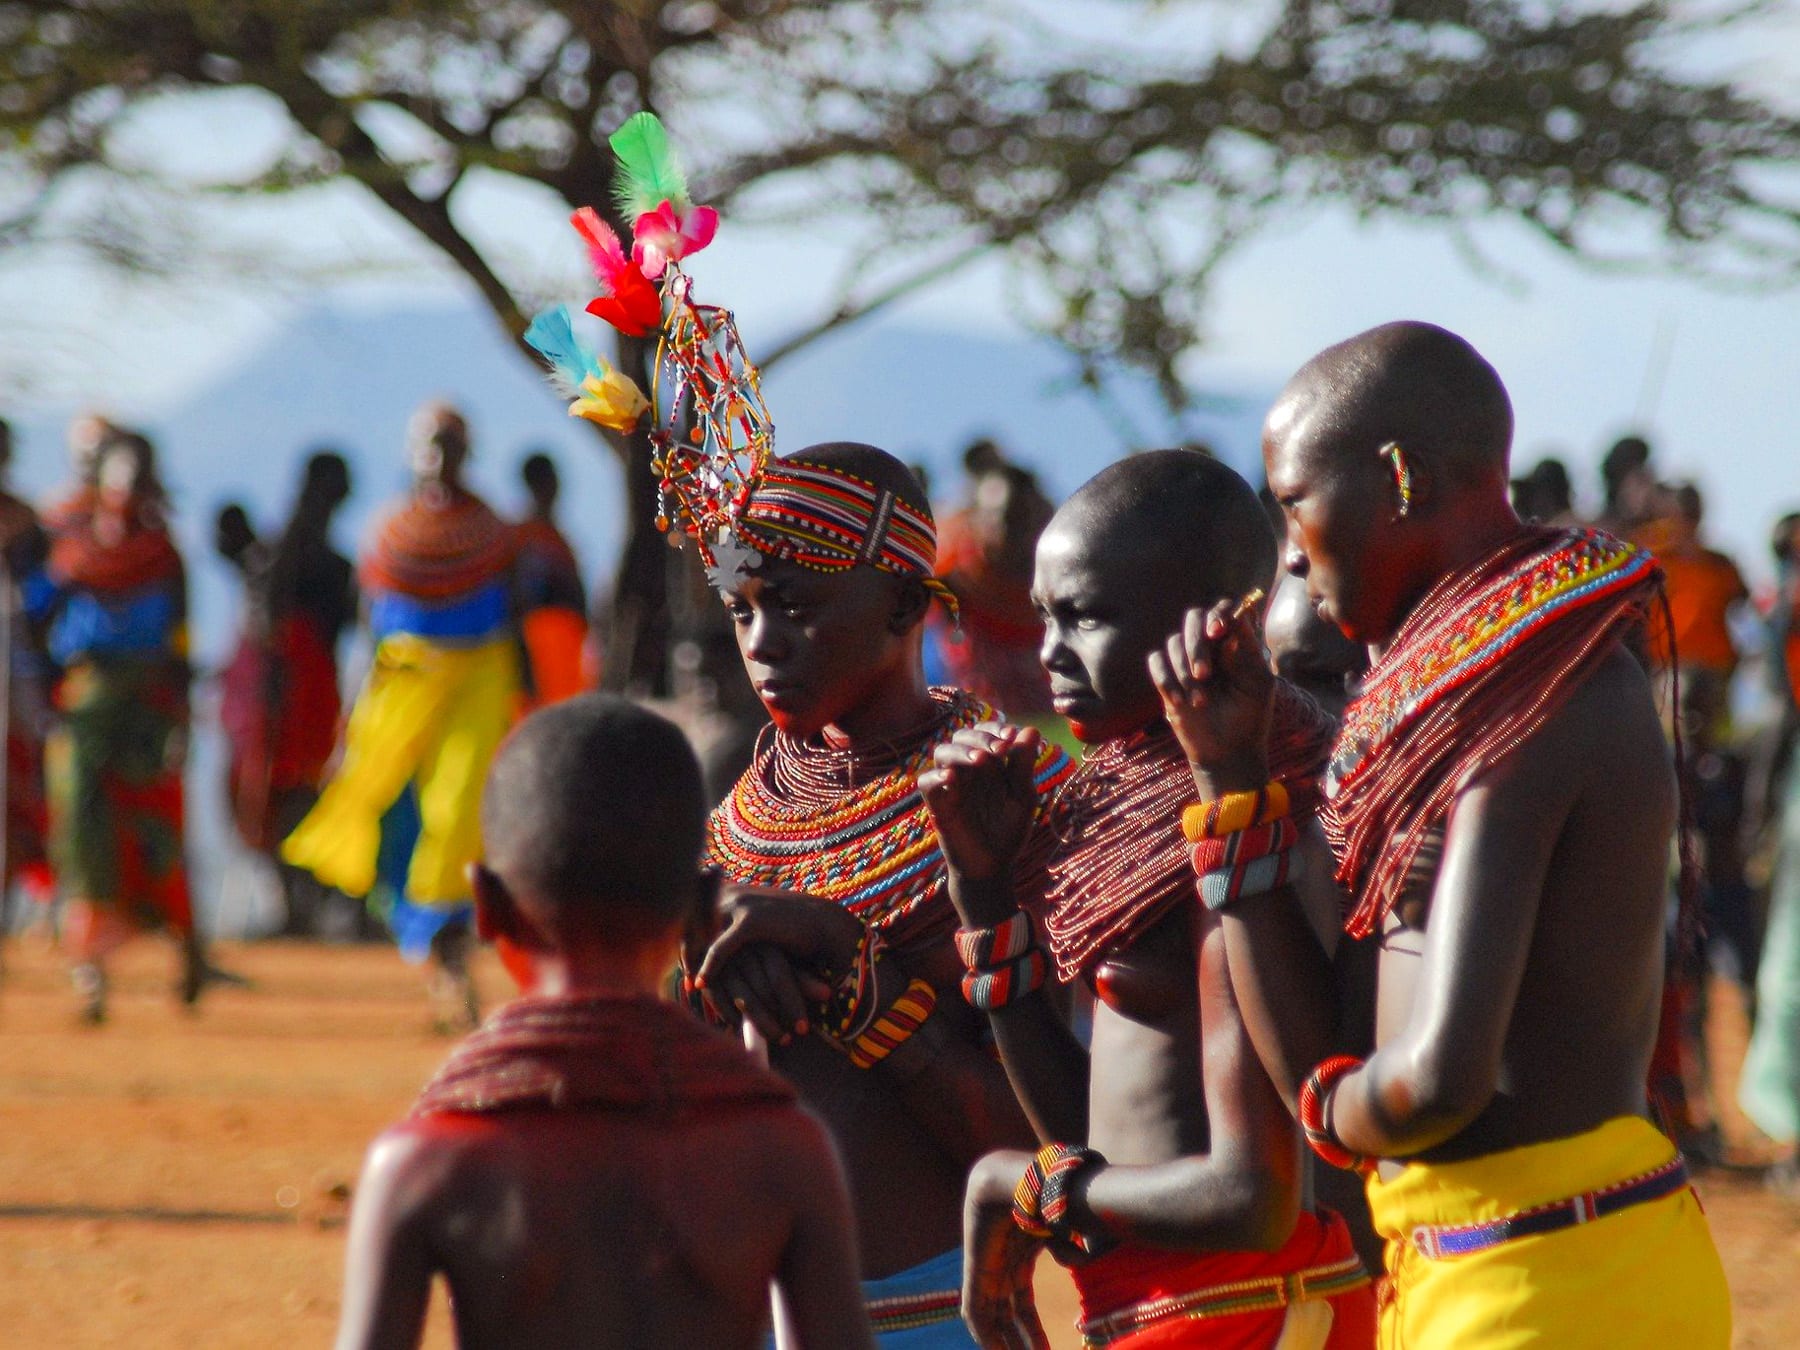 A traditional Samburu wedding. Image by Alex Strachan, Pixabay.com